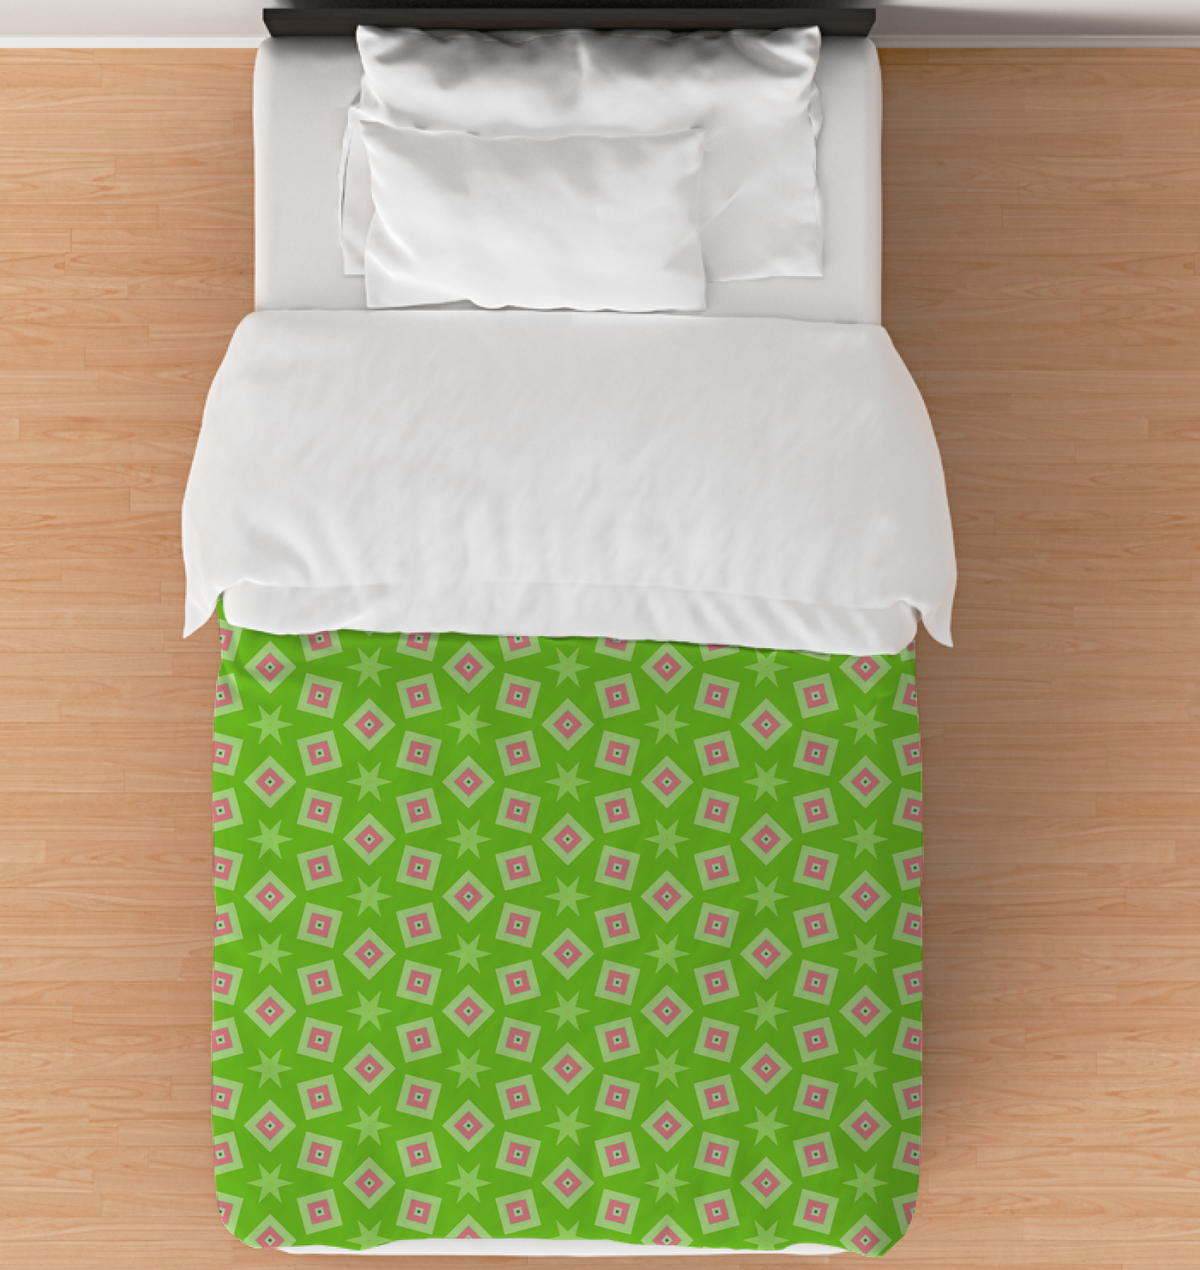 Chevron patterned comforter in stylish design for modern bedroom decor.